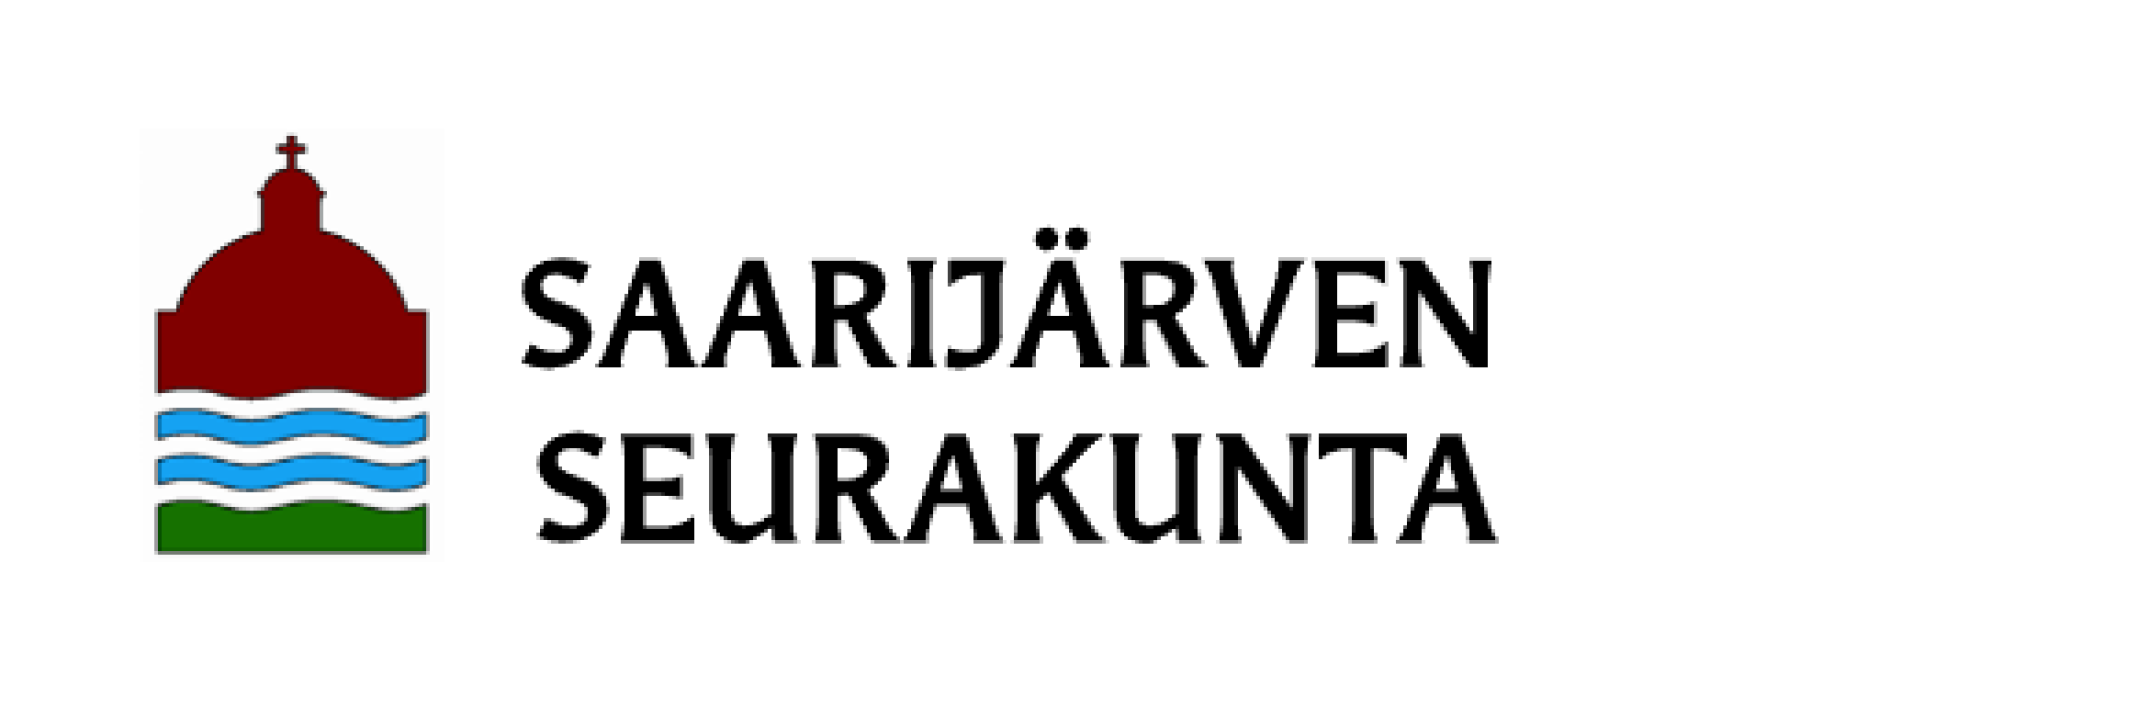 saarijärven srk logo